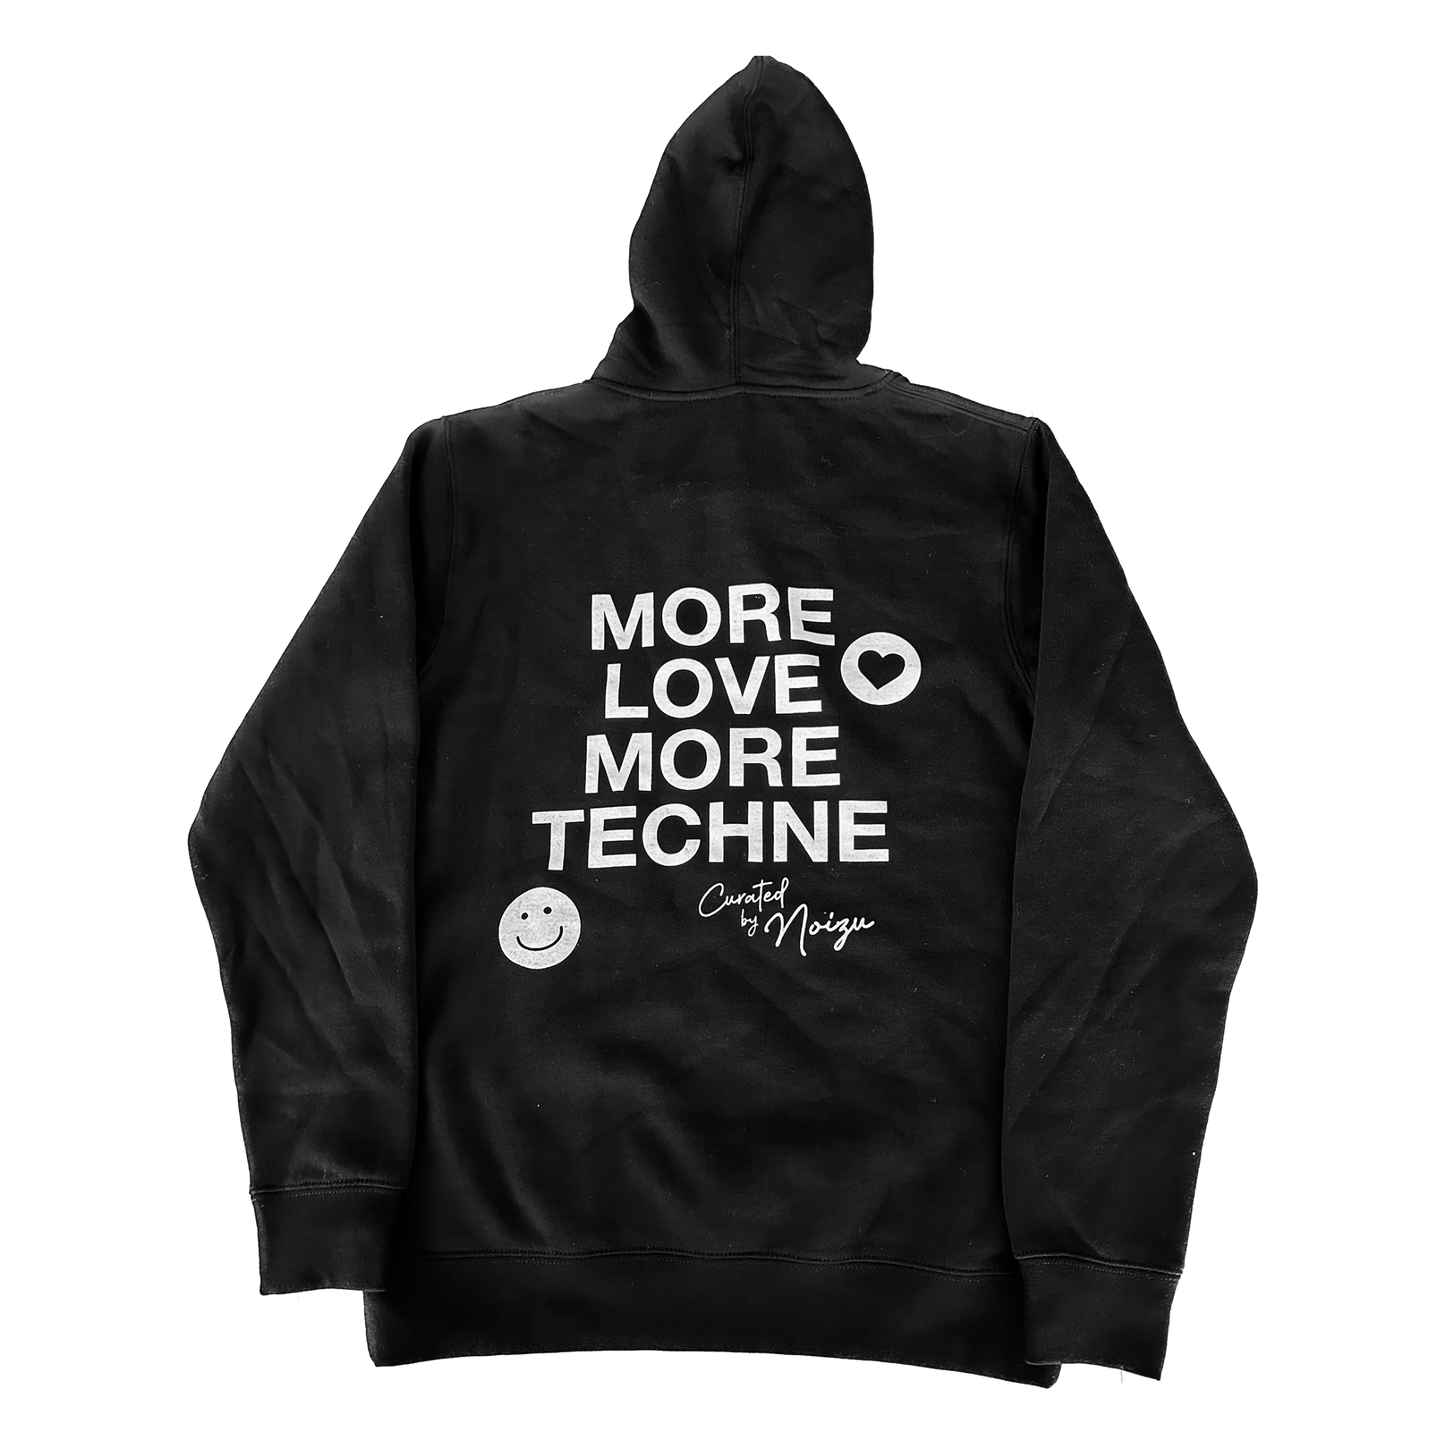 Techne 'More Love' Hoodie